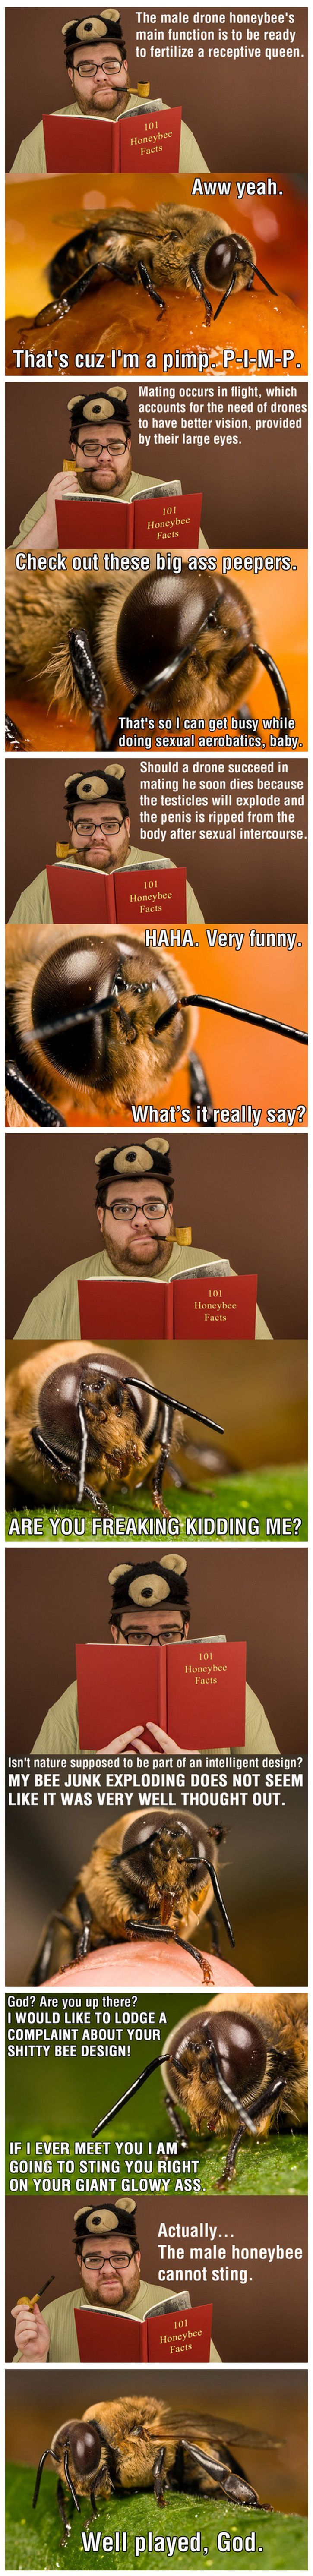 The Plight Of The Honeybee